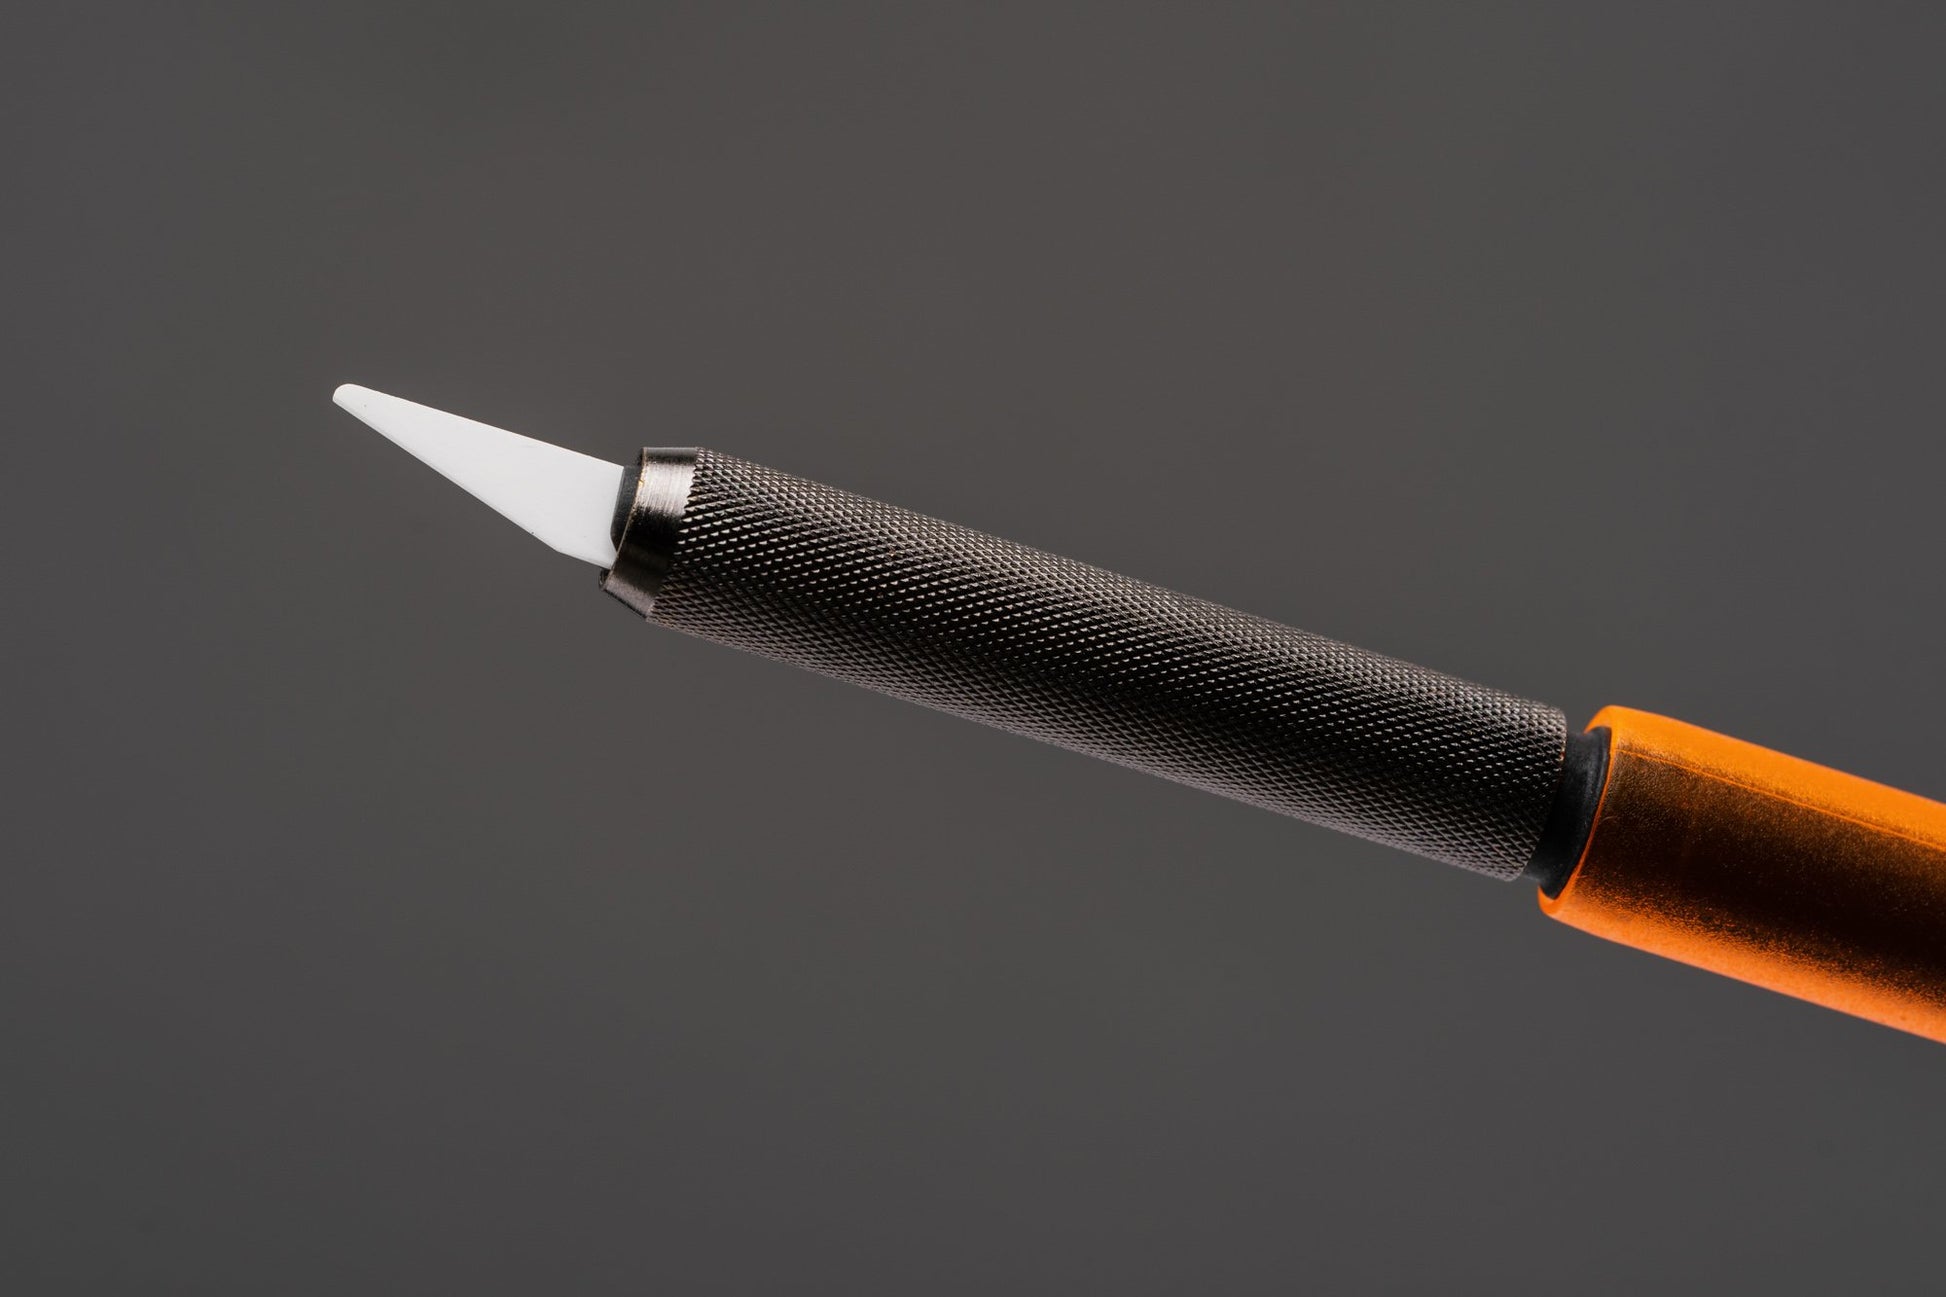 Slice 10589 Craft Knife, Built-in Safety Cap, Ceramic Precision Cutter 